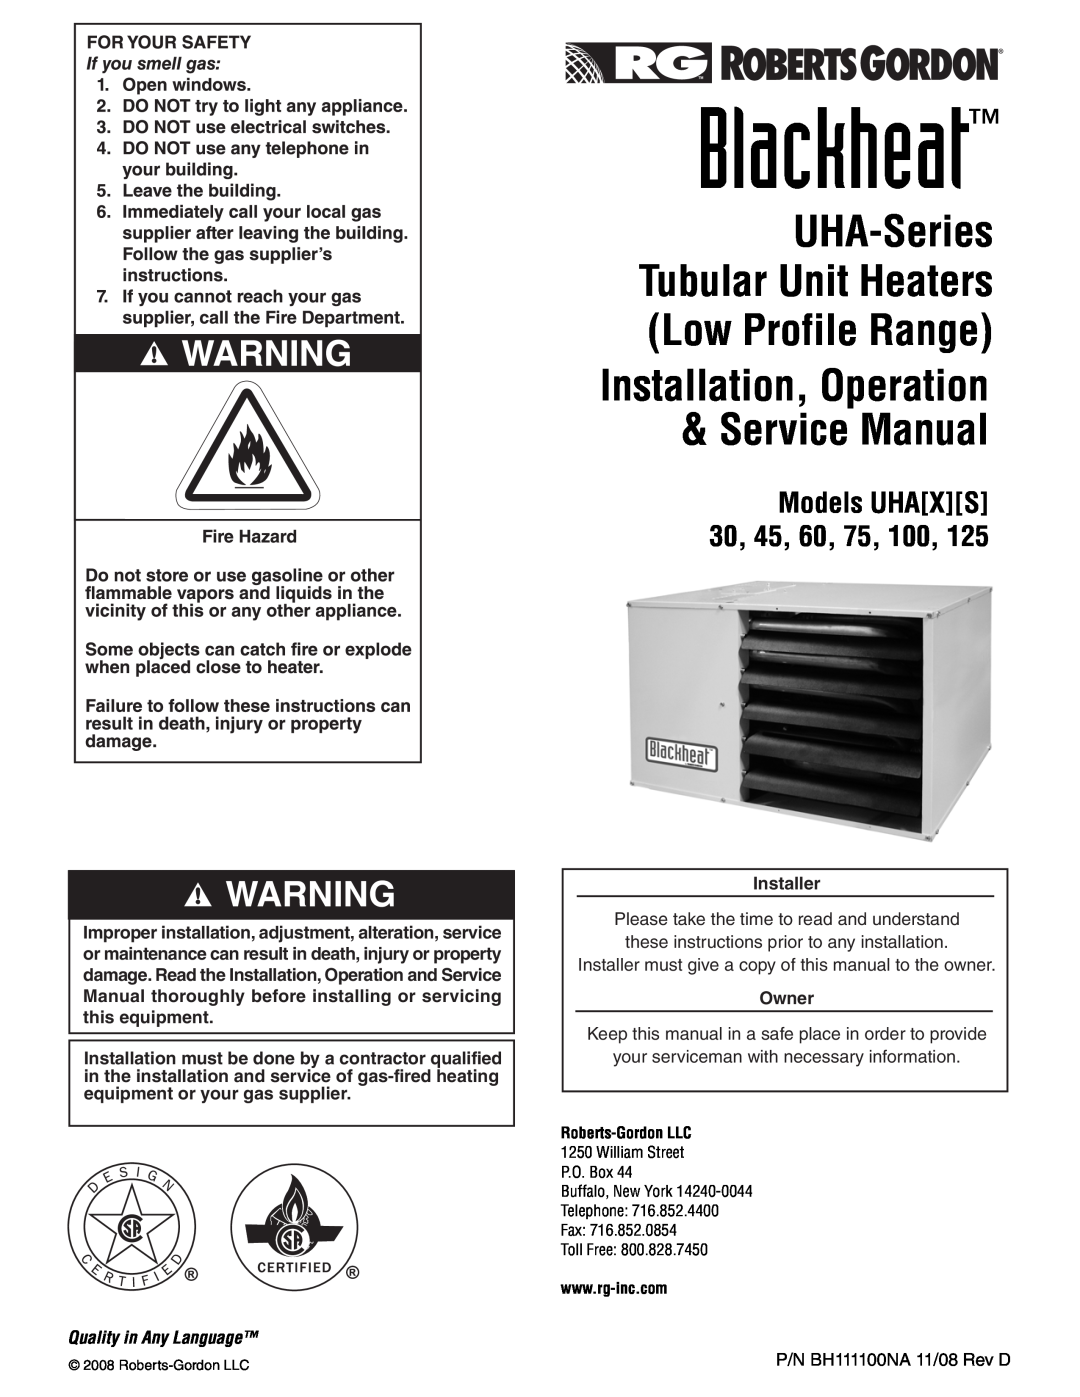 Roberts Gorden 100, 75, 125 service manual UHD-Series Tubular Duct Furnace Low Profile Range, Models UHDXS, Combat 